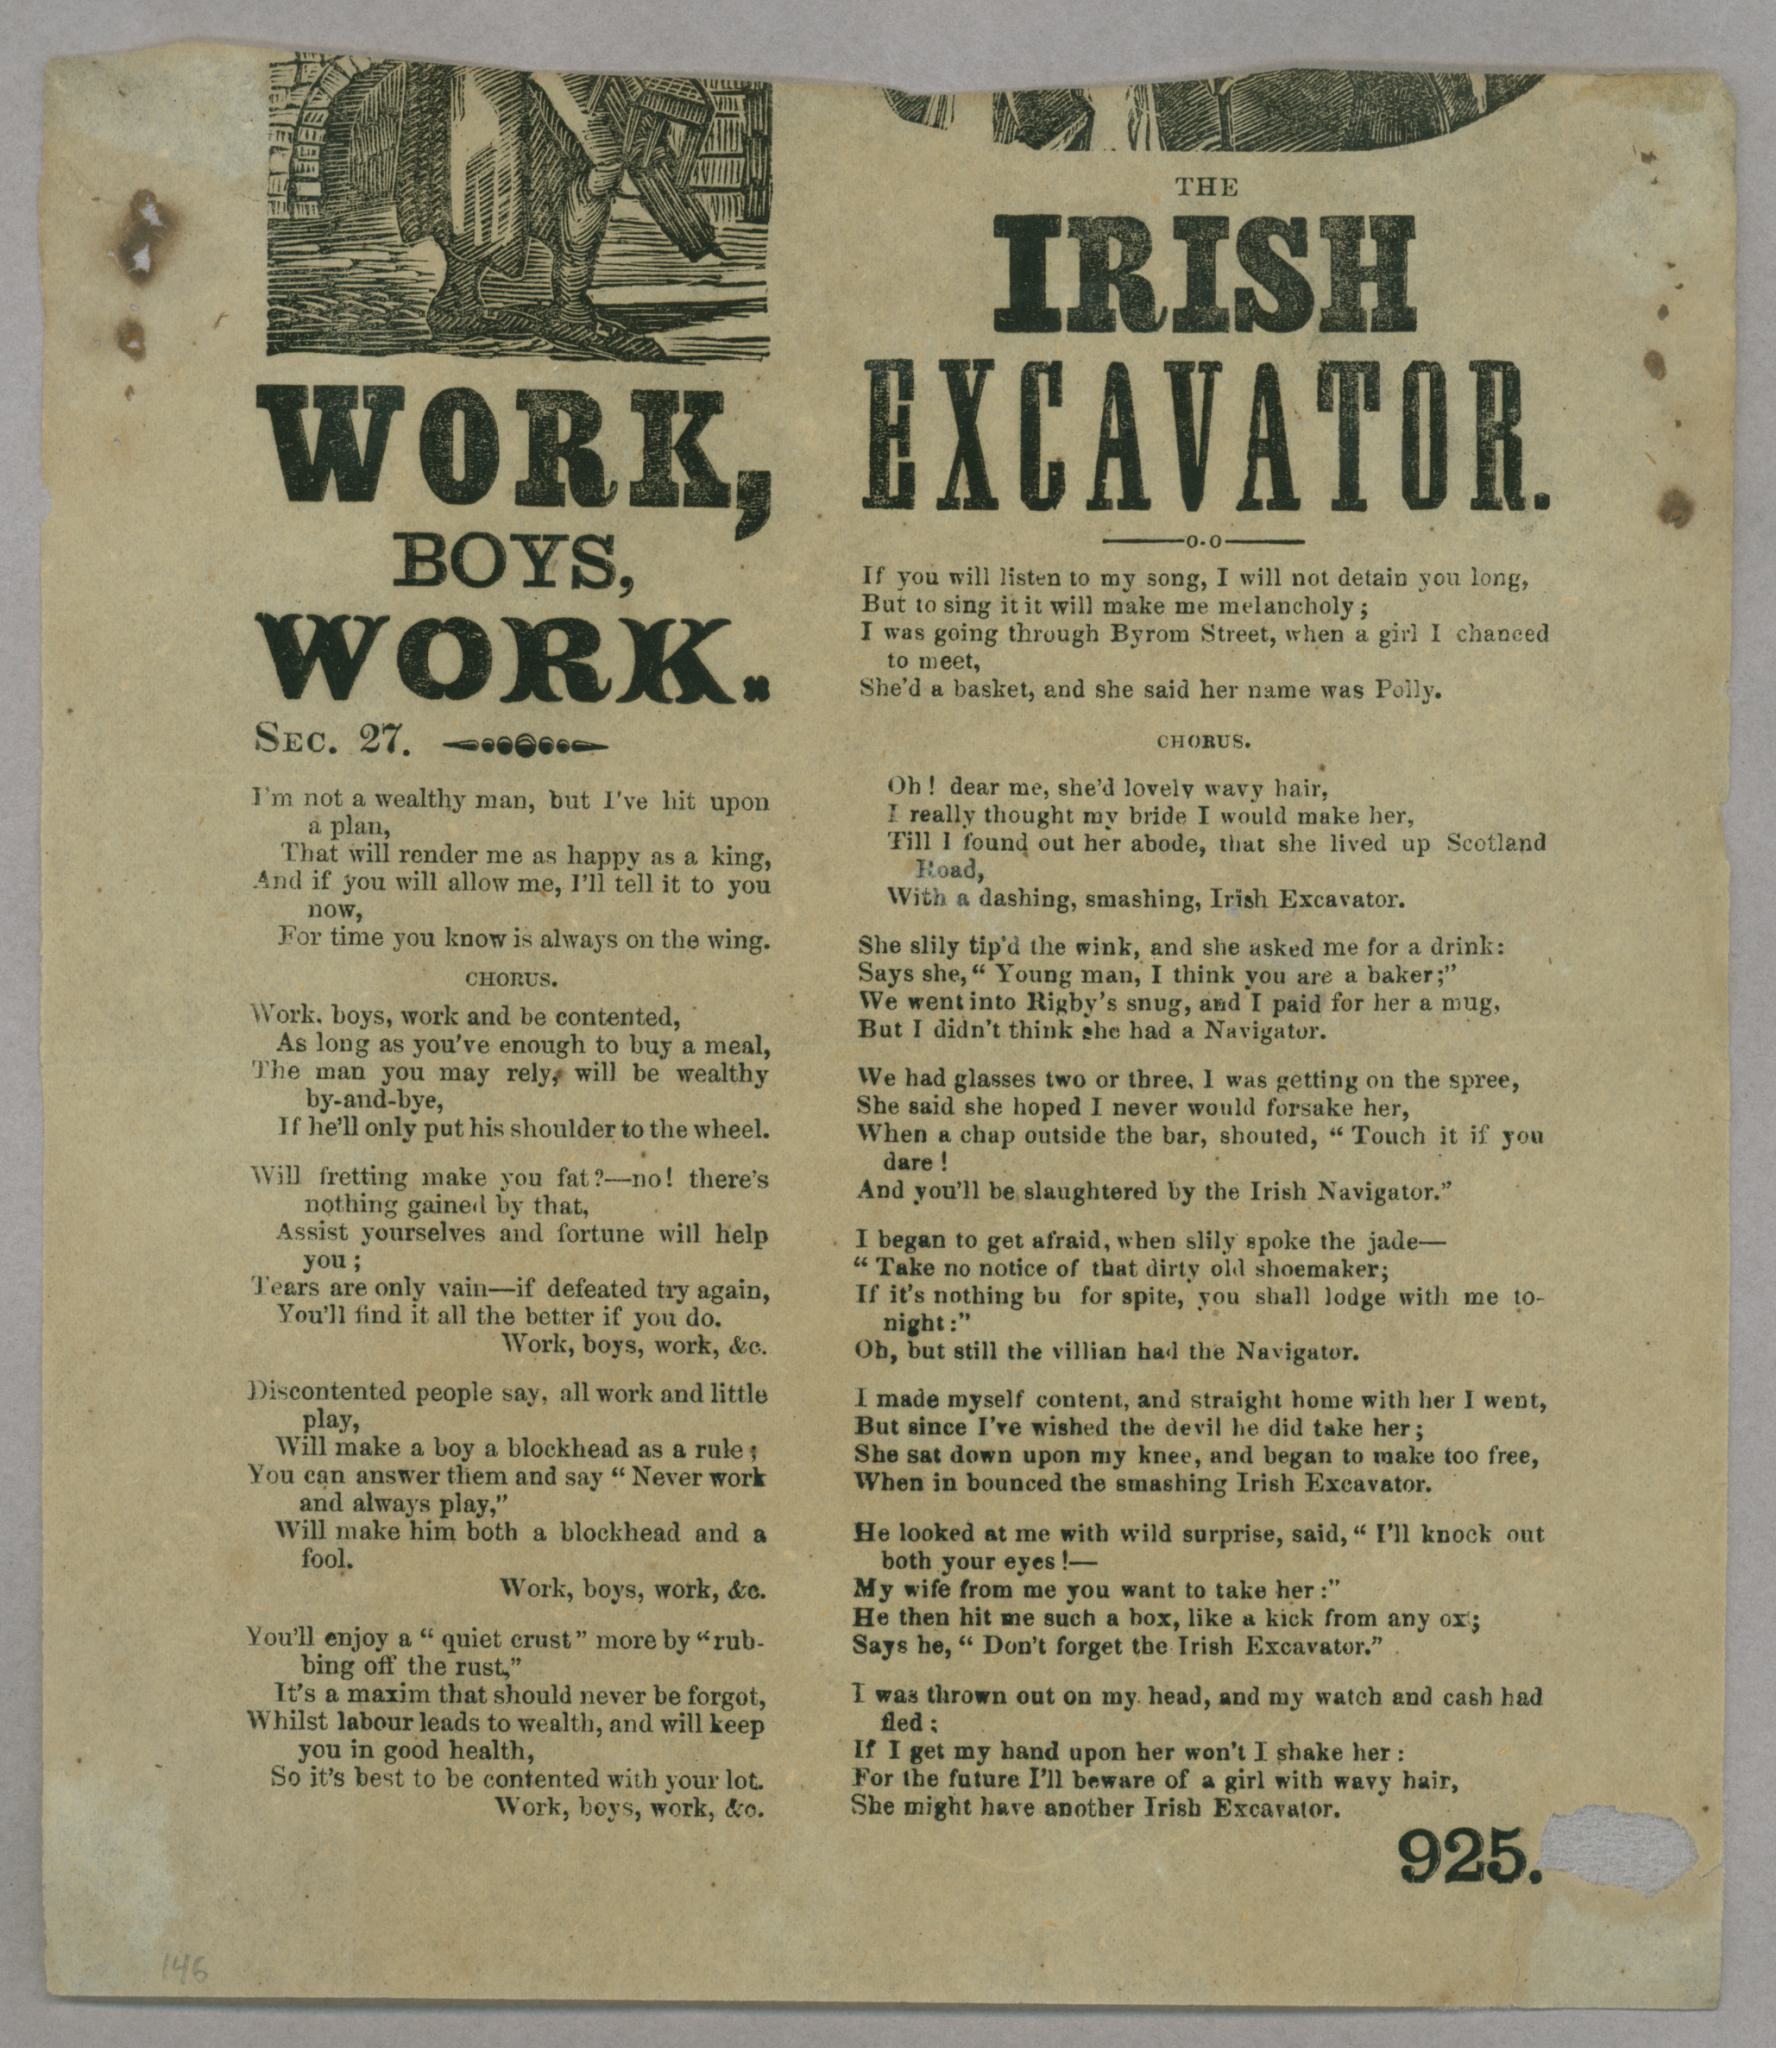 &quot;Work, Boys, Work,&quot; and &quot;The Irish Excavator&quot;